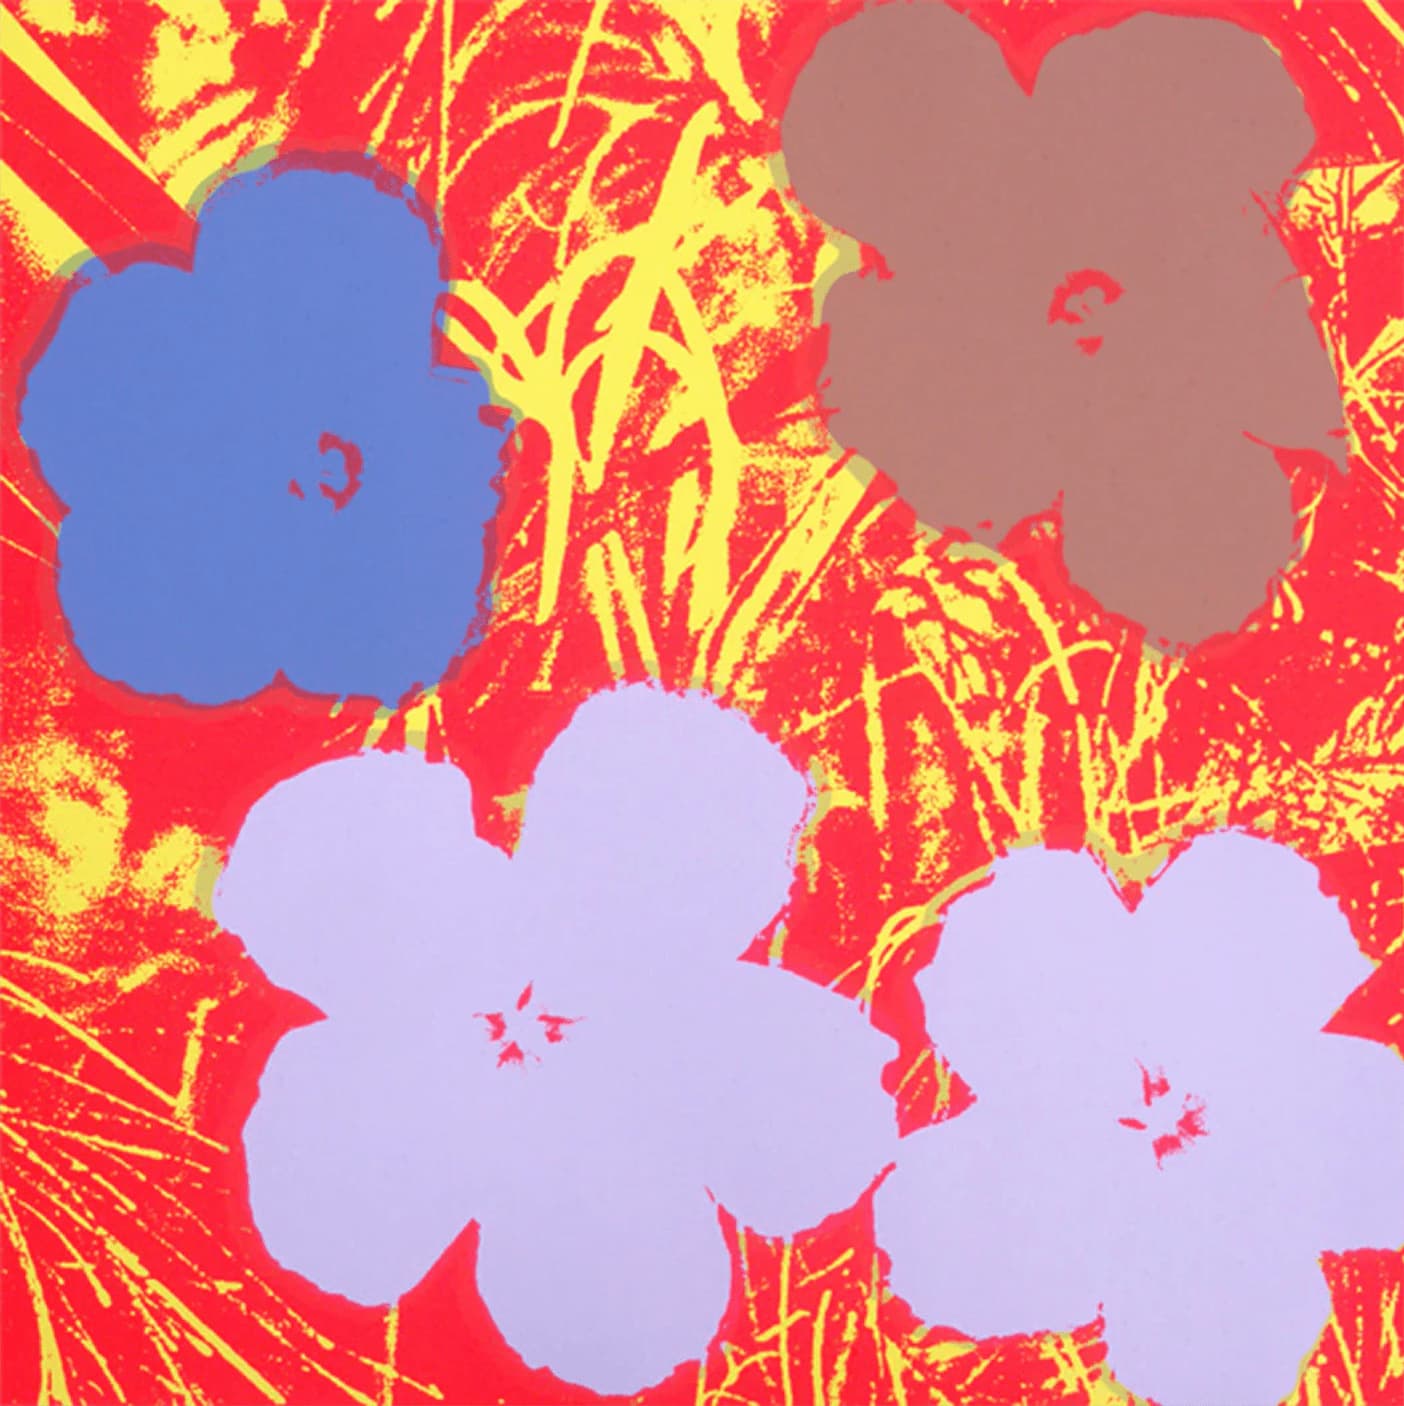 Andy Warhol, Flowers (FS II.69), 1970